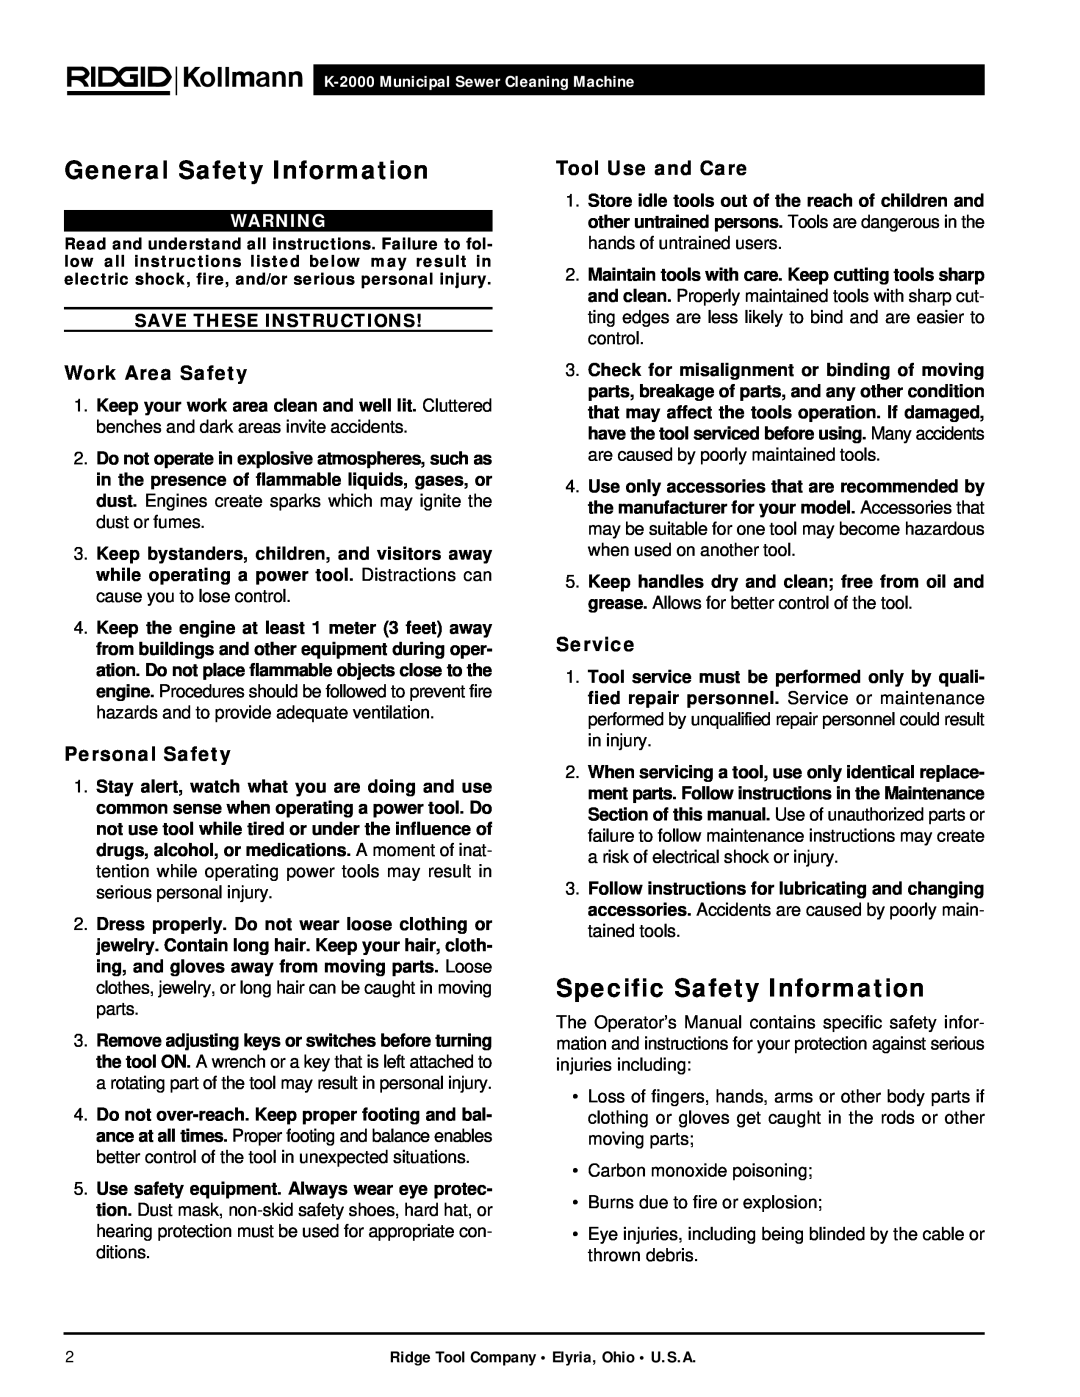 RIDGID K-2000 manual General Safety Information, Specific Safety Information, Work Area Safety, Personal Safety, Service 